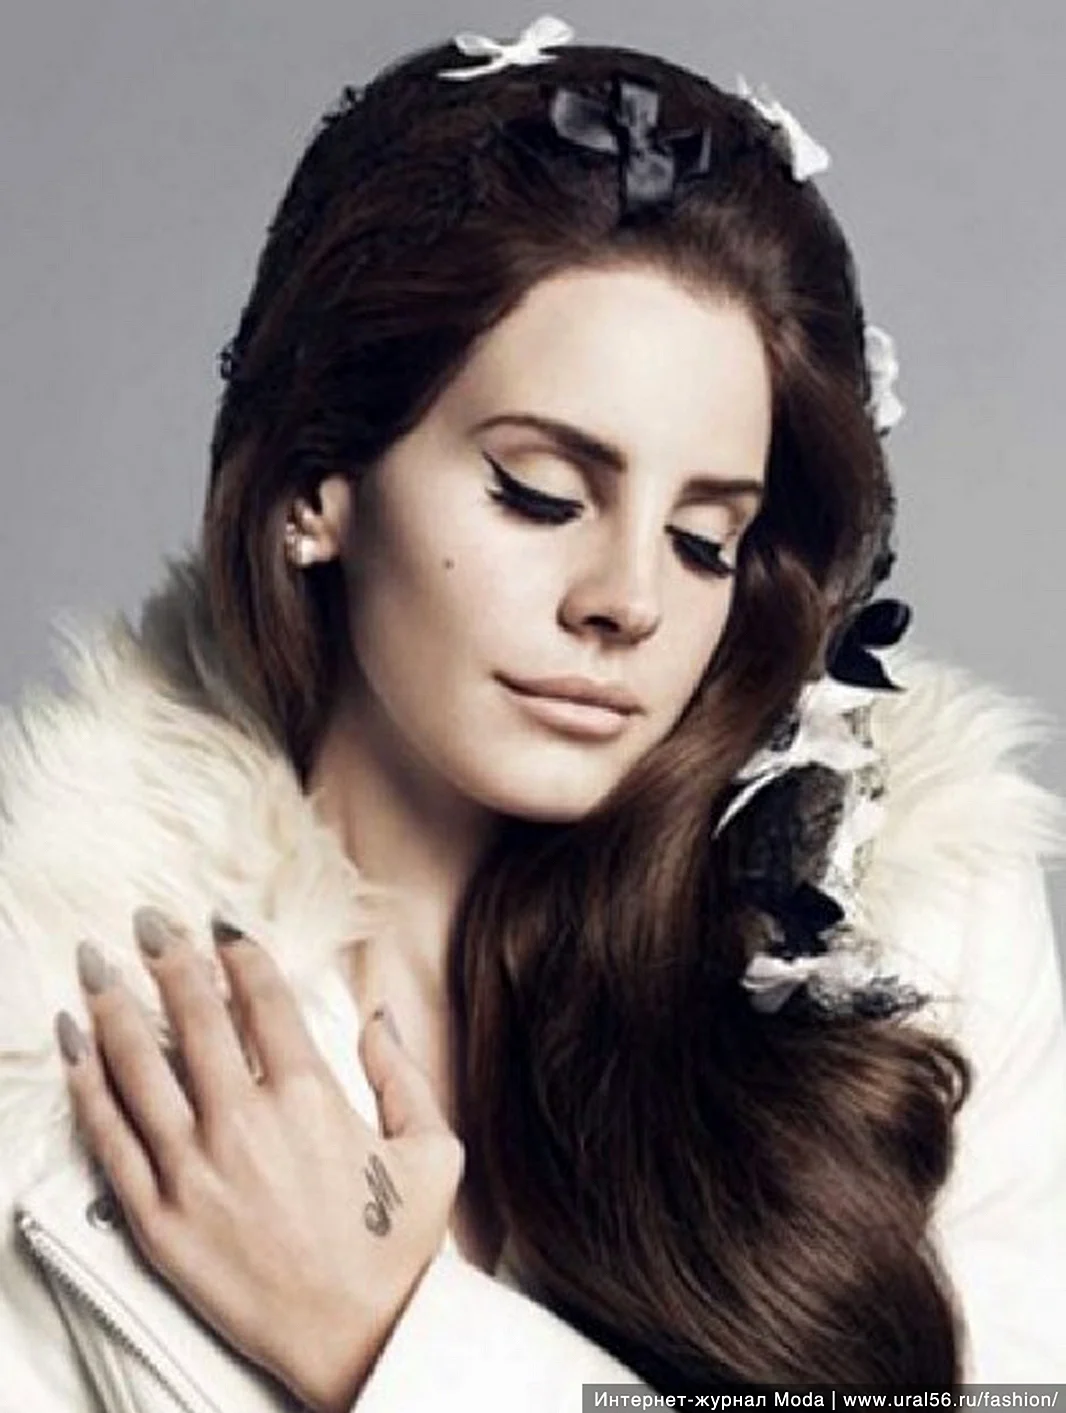 Lana Del Rey Wallpaper For iPhone